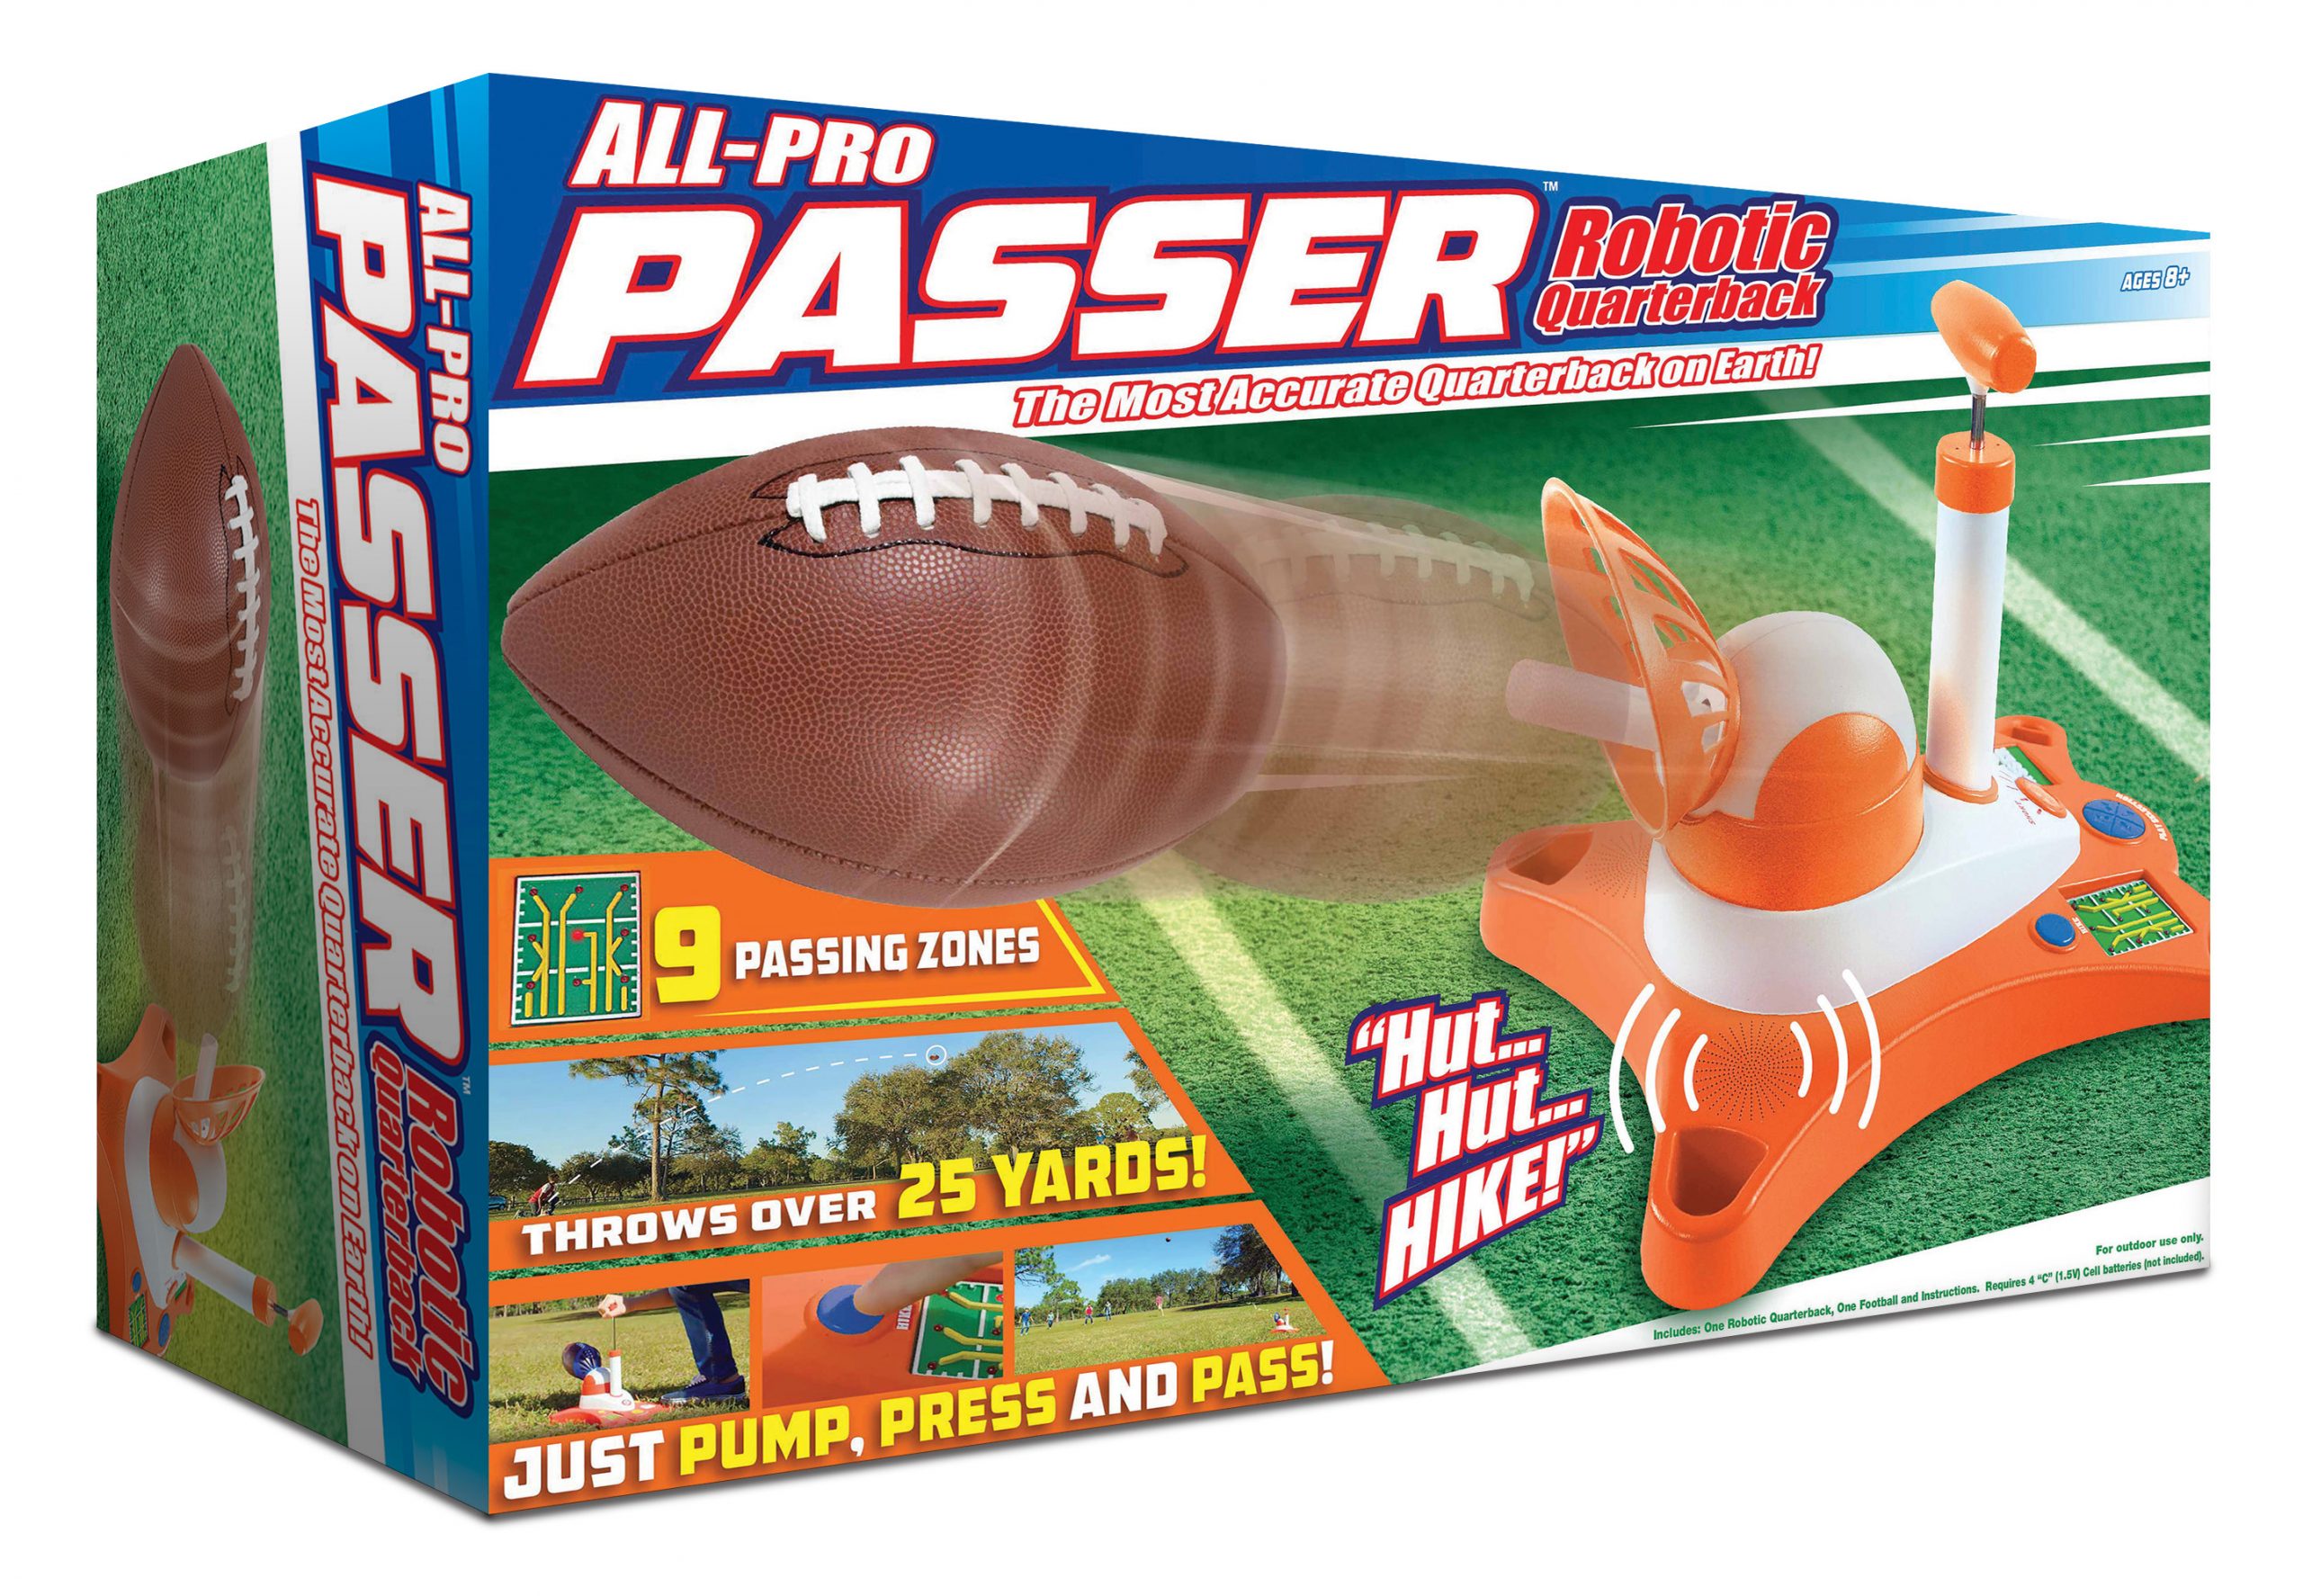 All-Pro Passer